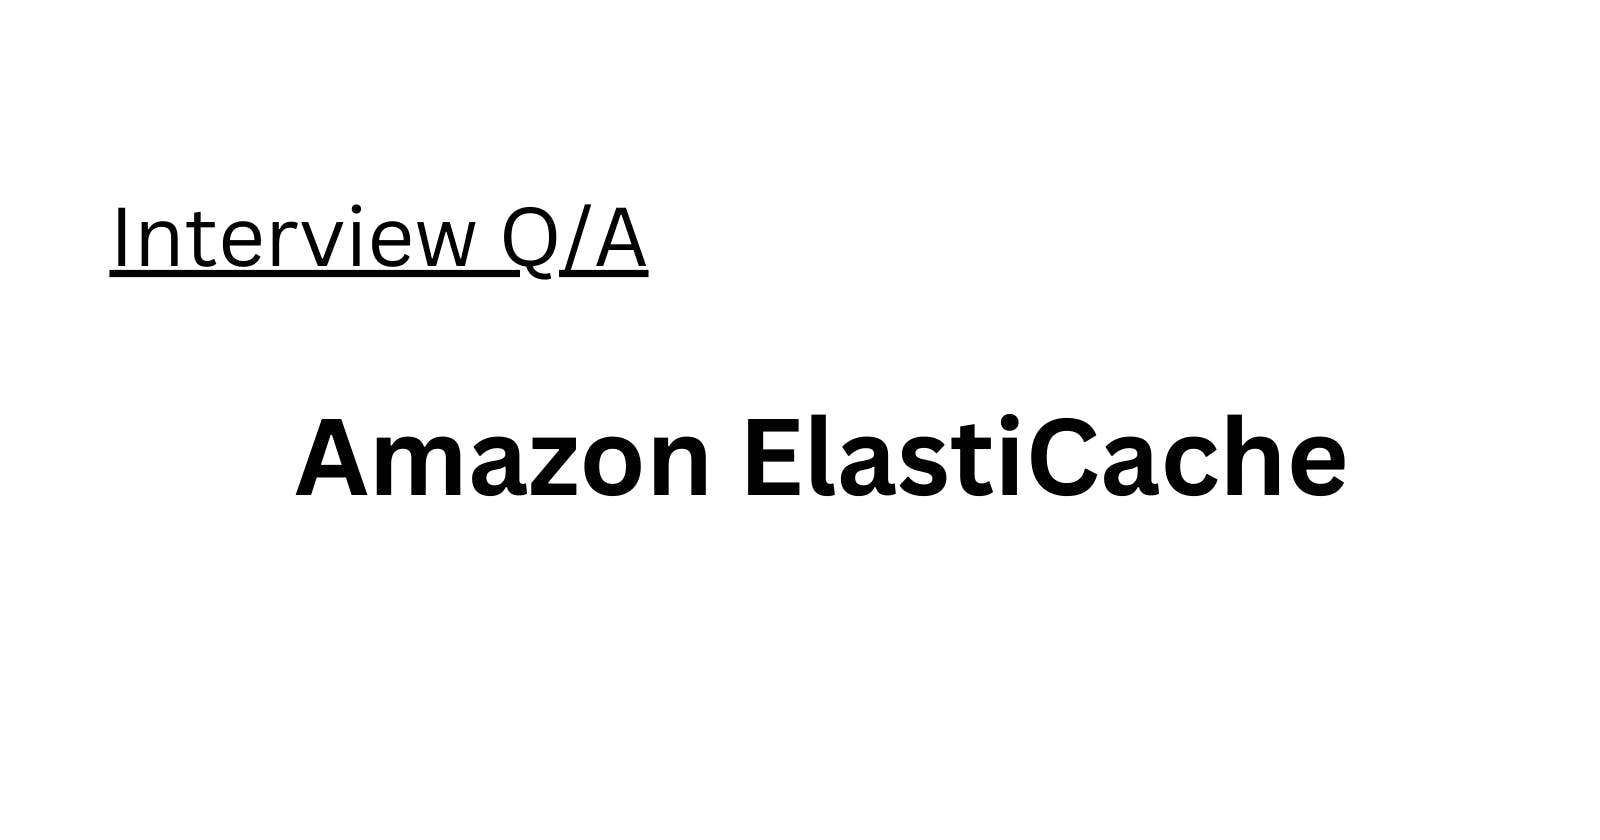 Amazon ElastiCache Interview Q/A